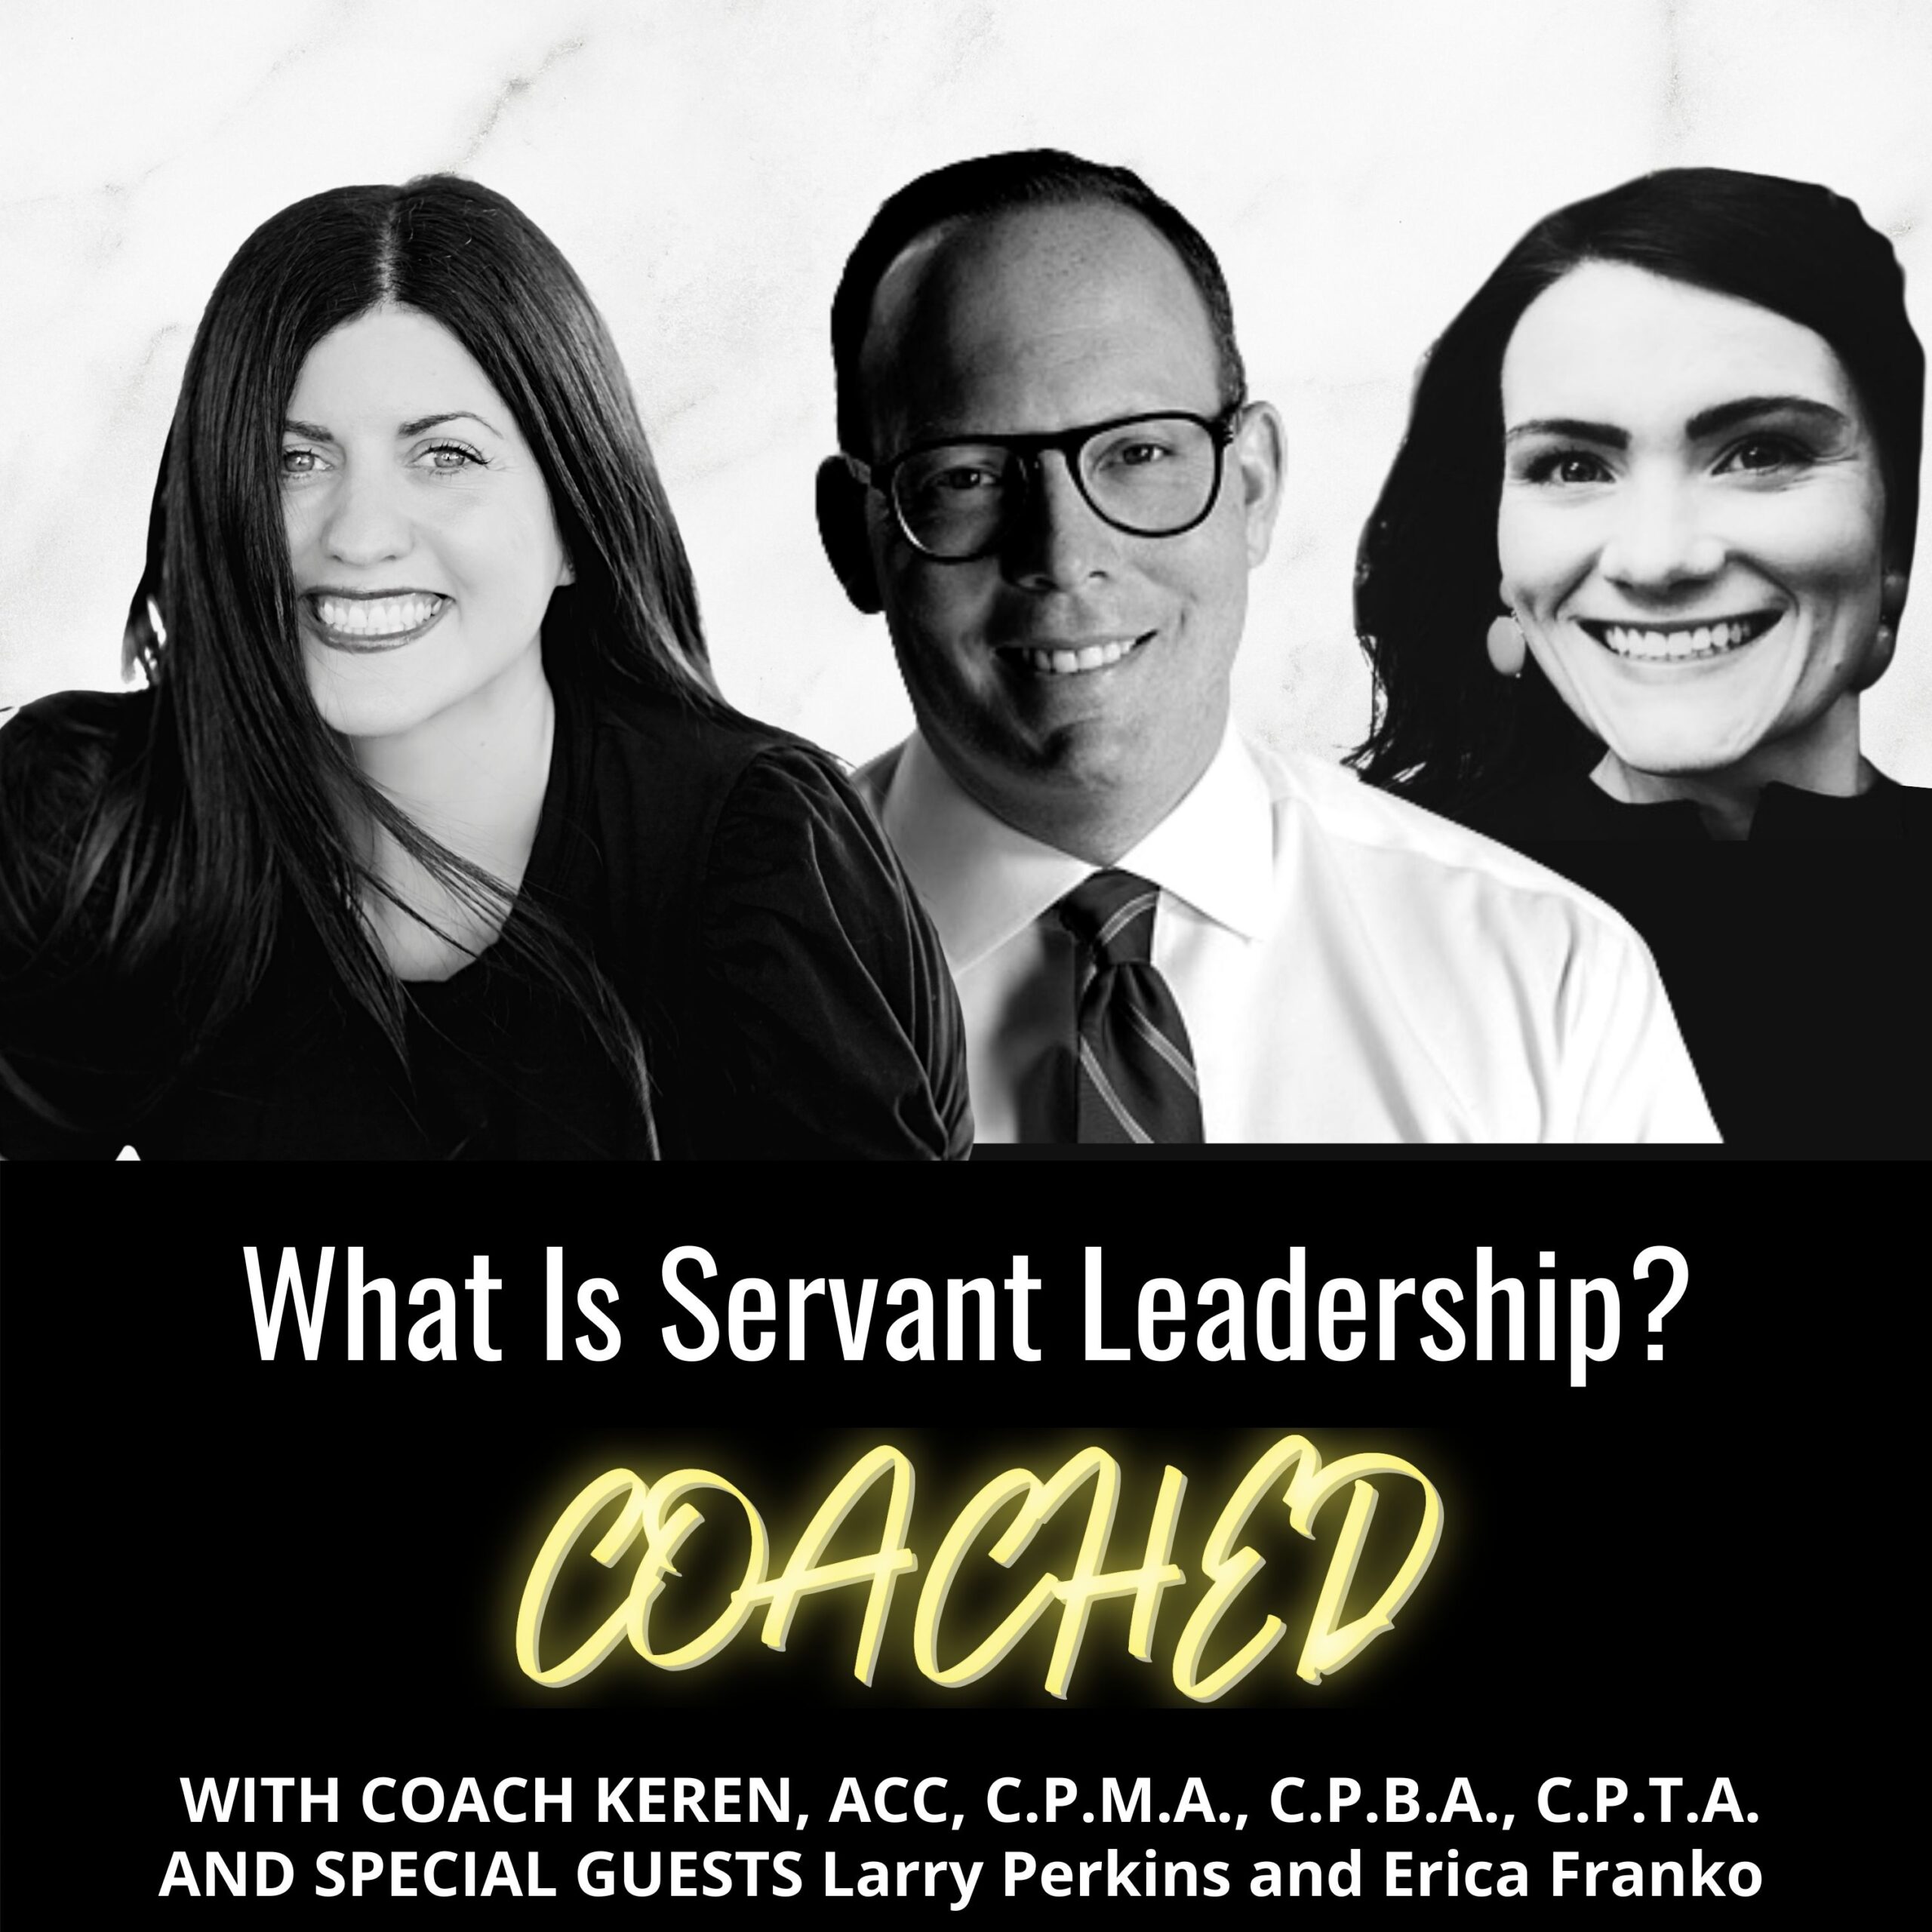 8 Keys to Coach John Wooden's Servant Leadership